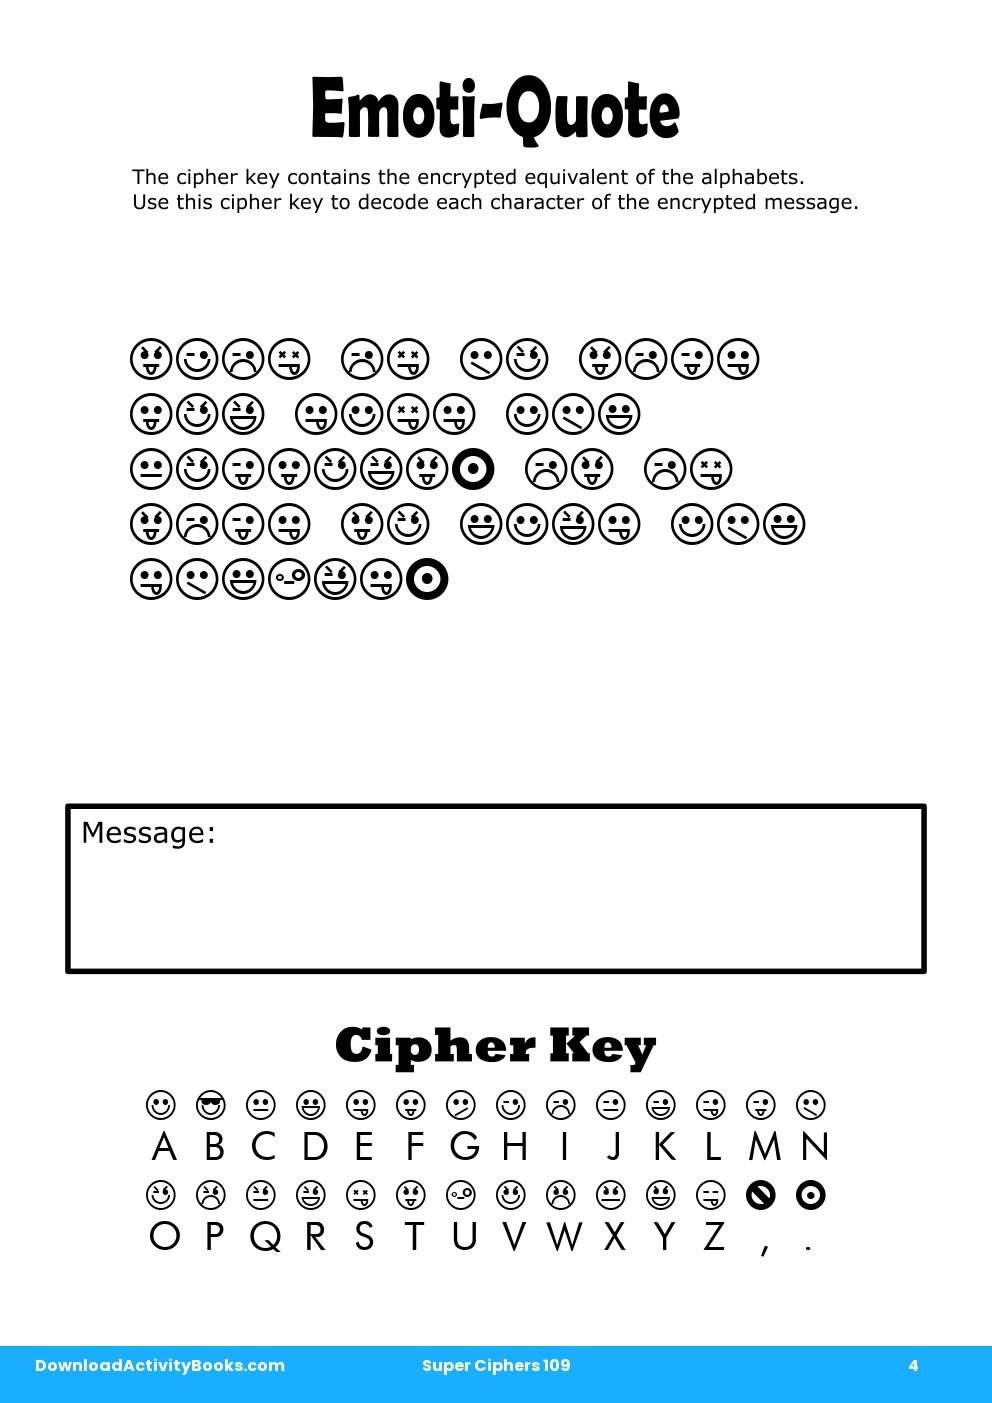 Emoti-Quote in Super Ciphers 109